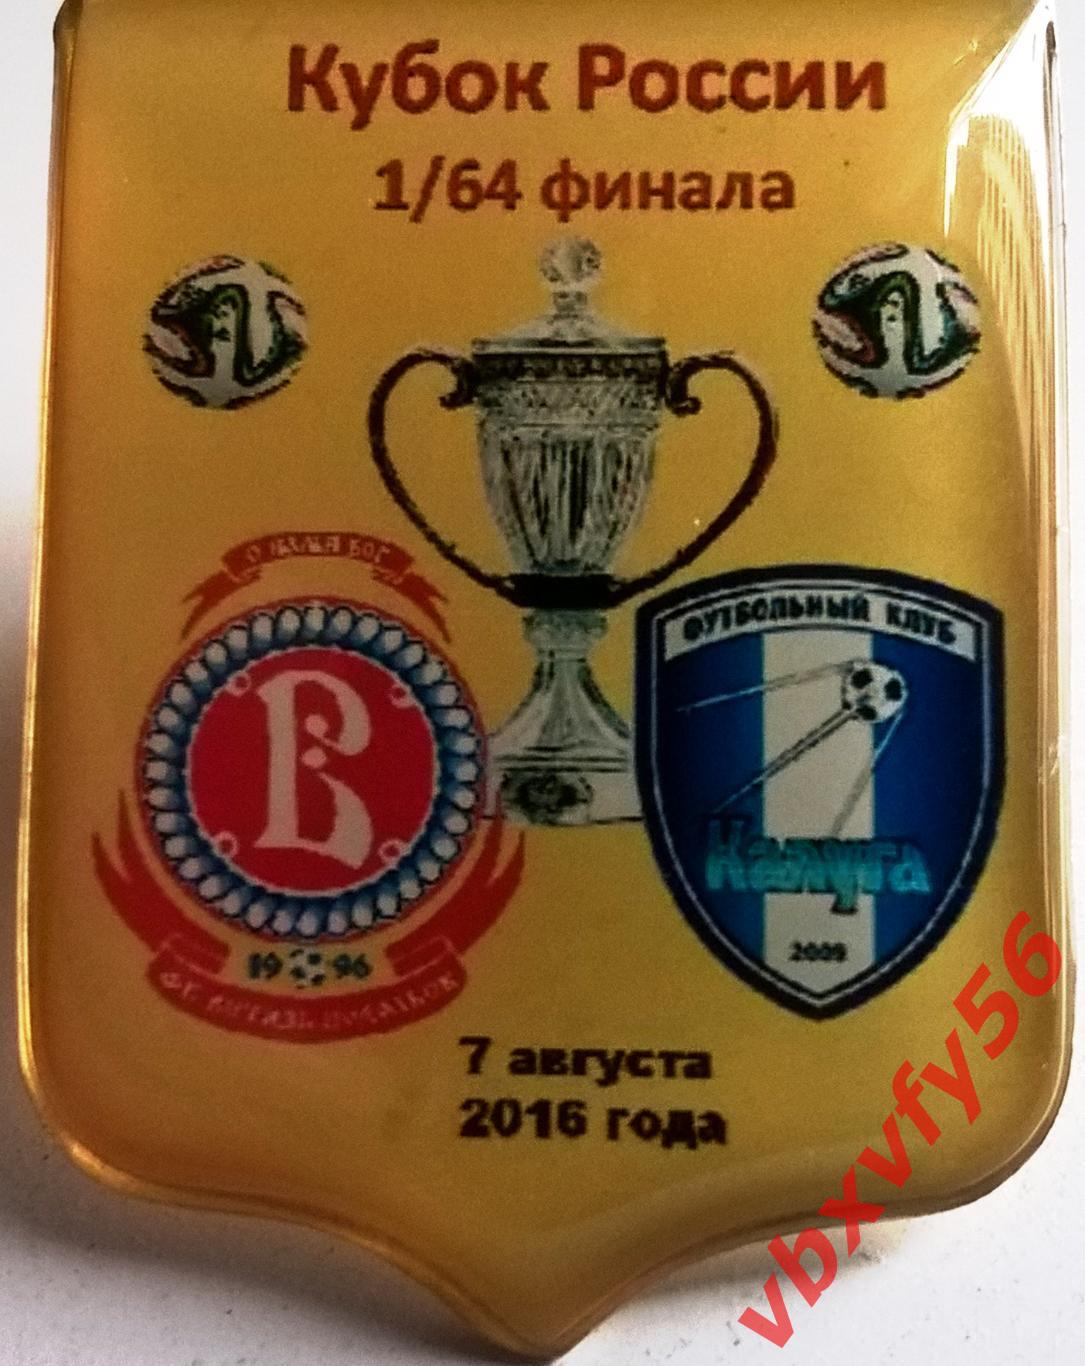 матчевый Витязь-Калуга 7августа 2016г. 1/64 Финала 3:5